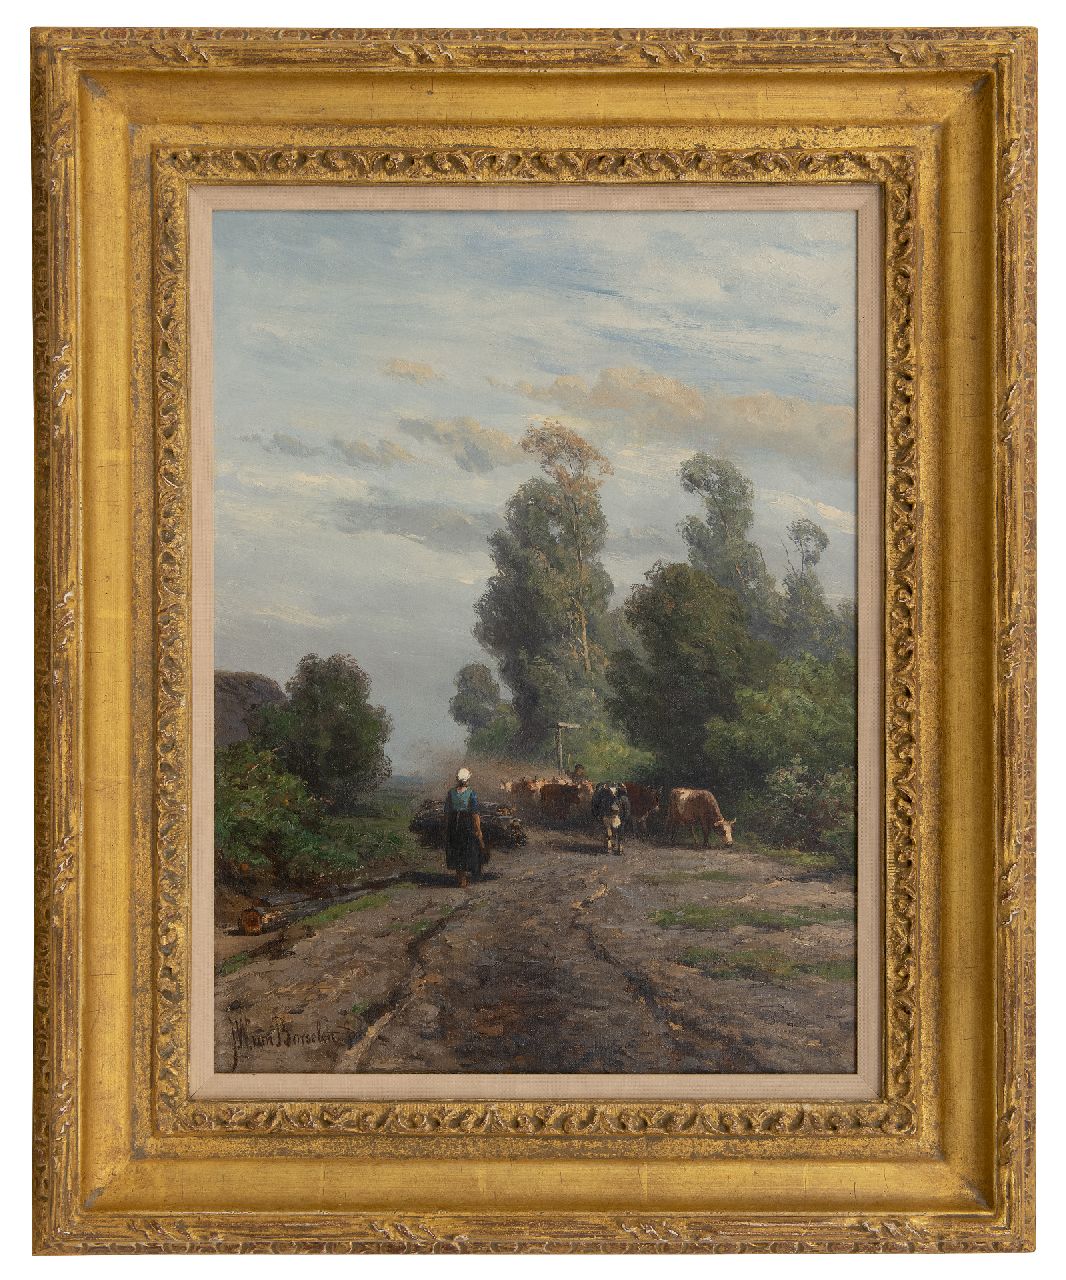 Borselen J.W. van | Jan Willem van Borselen | Paintings offered for sale | Summer landscape with herd and shepherd, oil on canvas 40.9 x 31.0 cm, signed l.l.